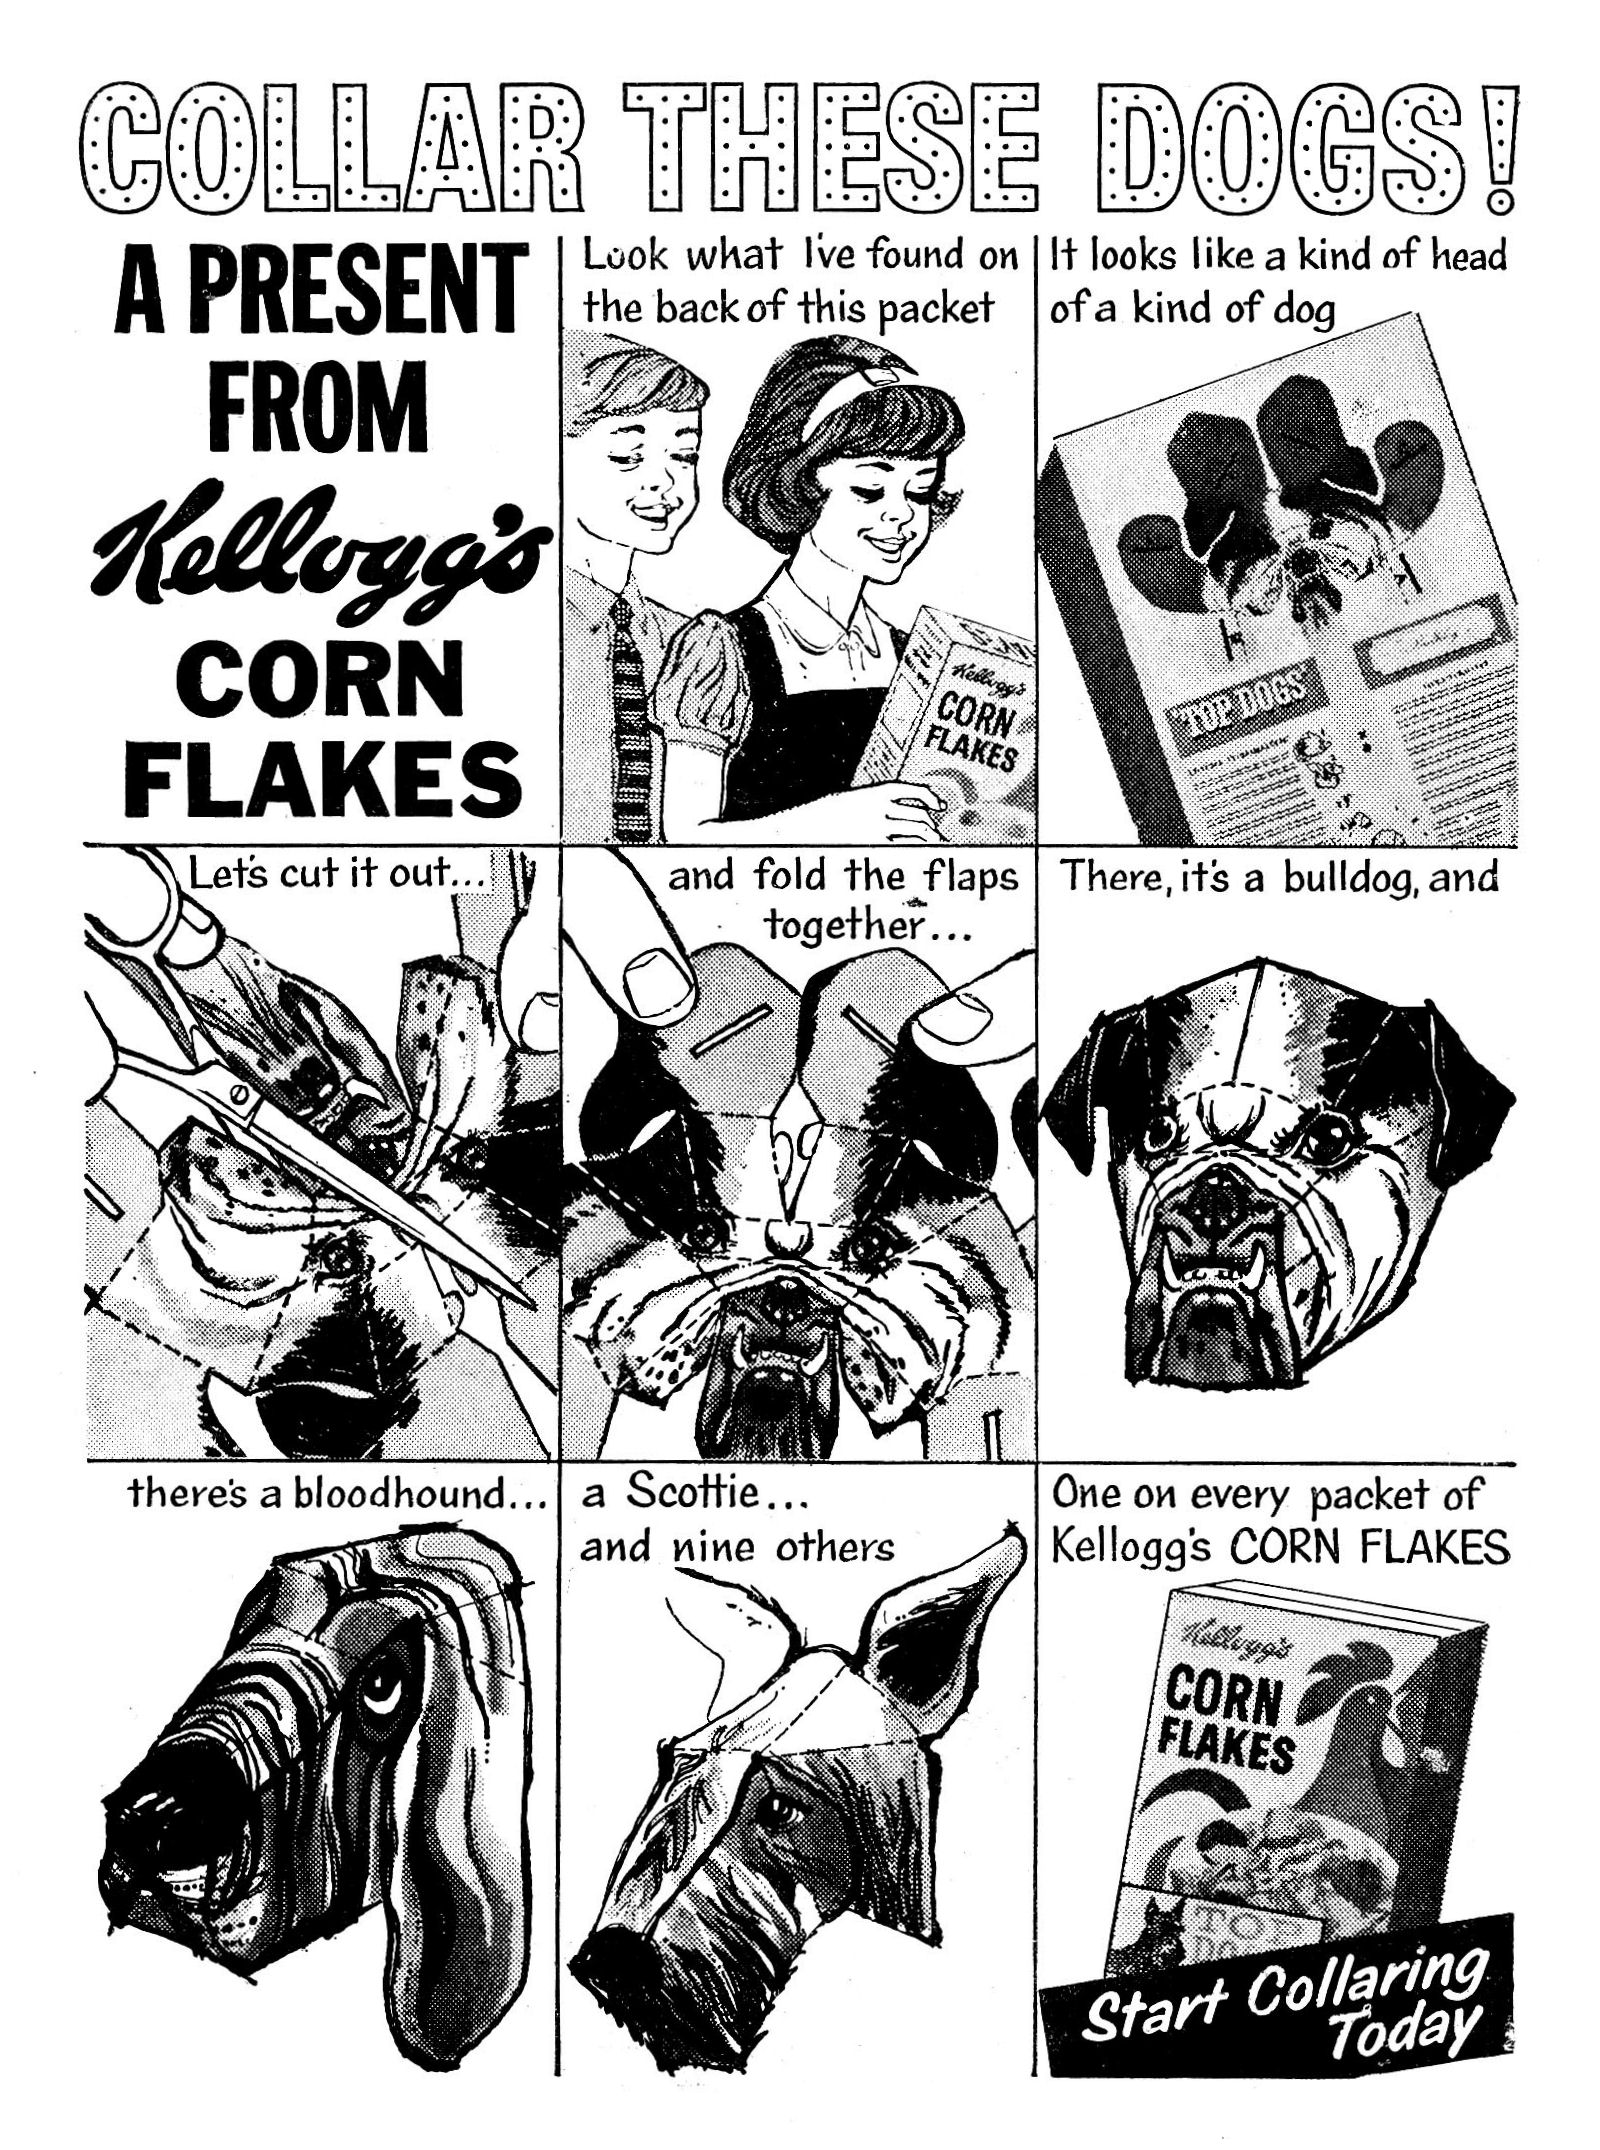 1964 Cornflakes Top Dog Heads